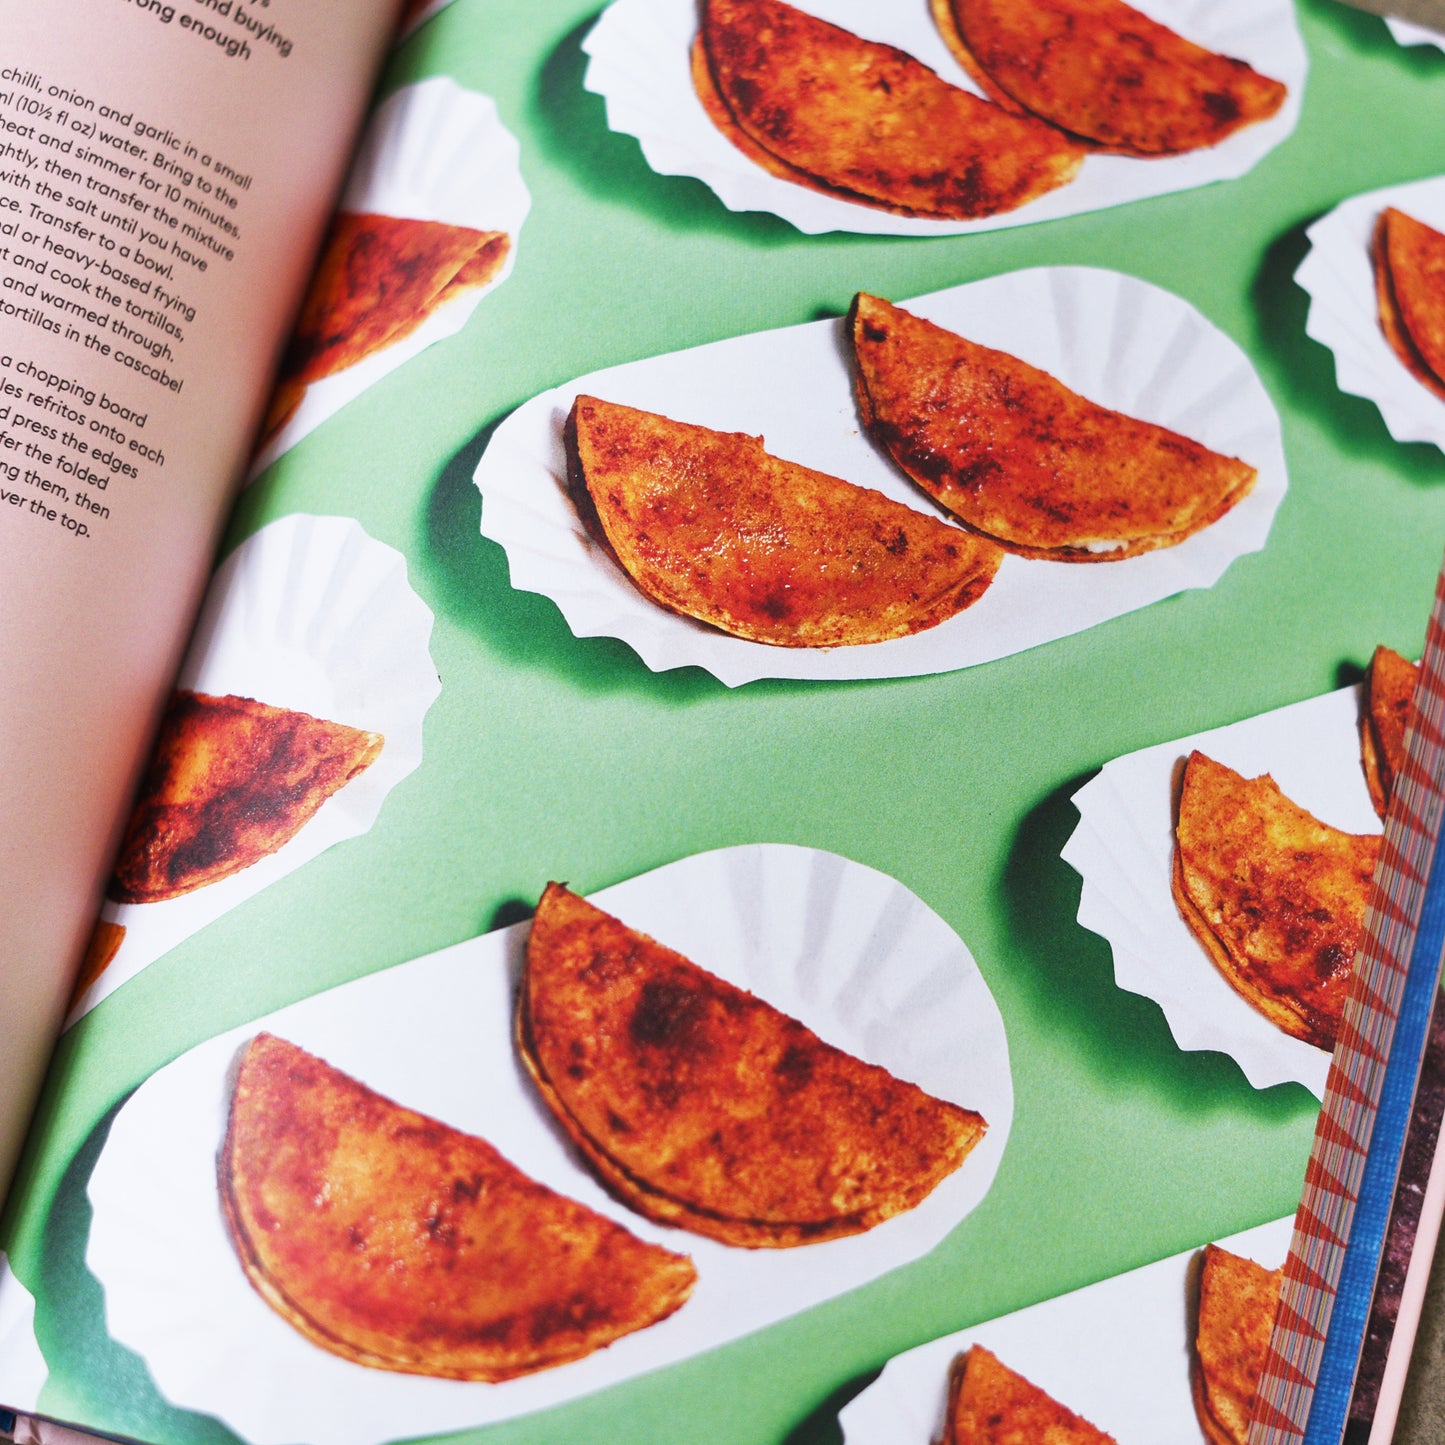 Comida Mexicana: A Mexican Cookbook by Rosa Cienfuegos